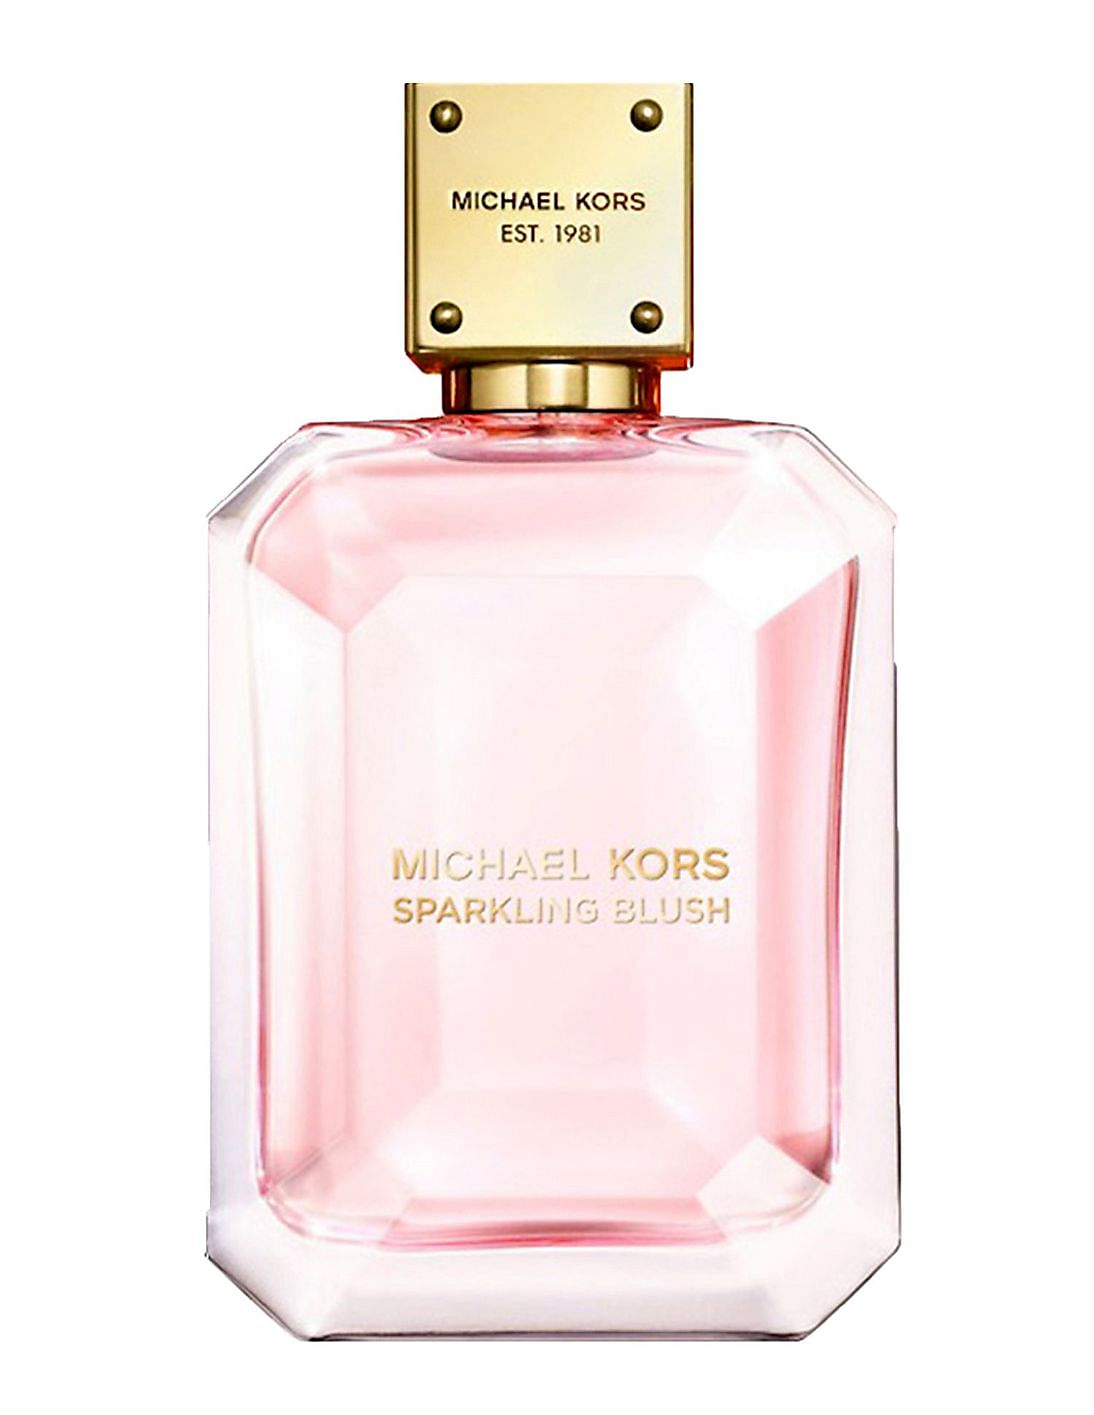 Michael Kors Sparkling Blush2pc Gift SetNIBBeautiful Valentines Gift   eBay